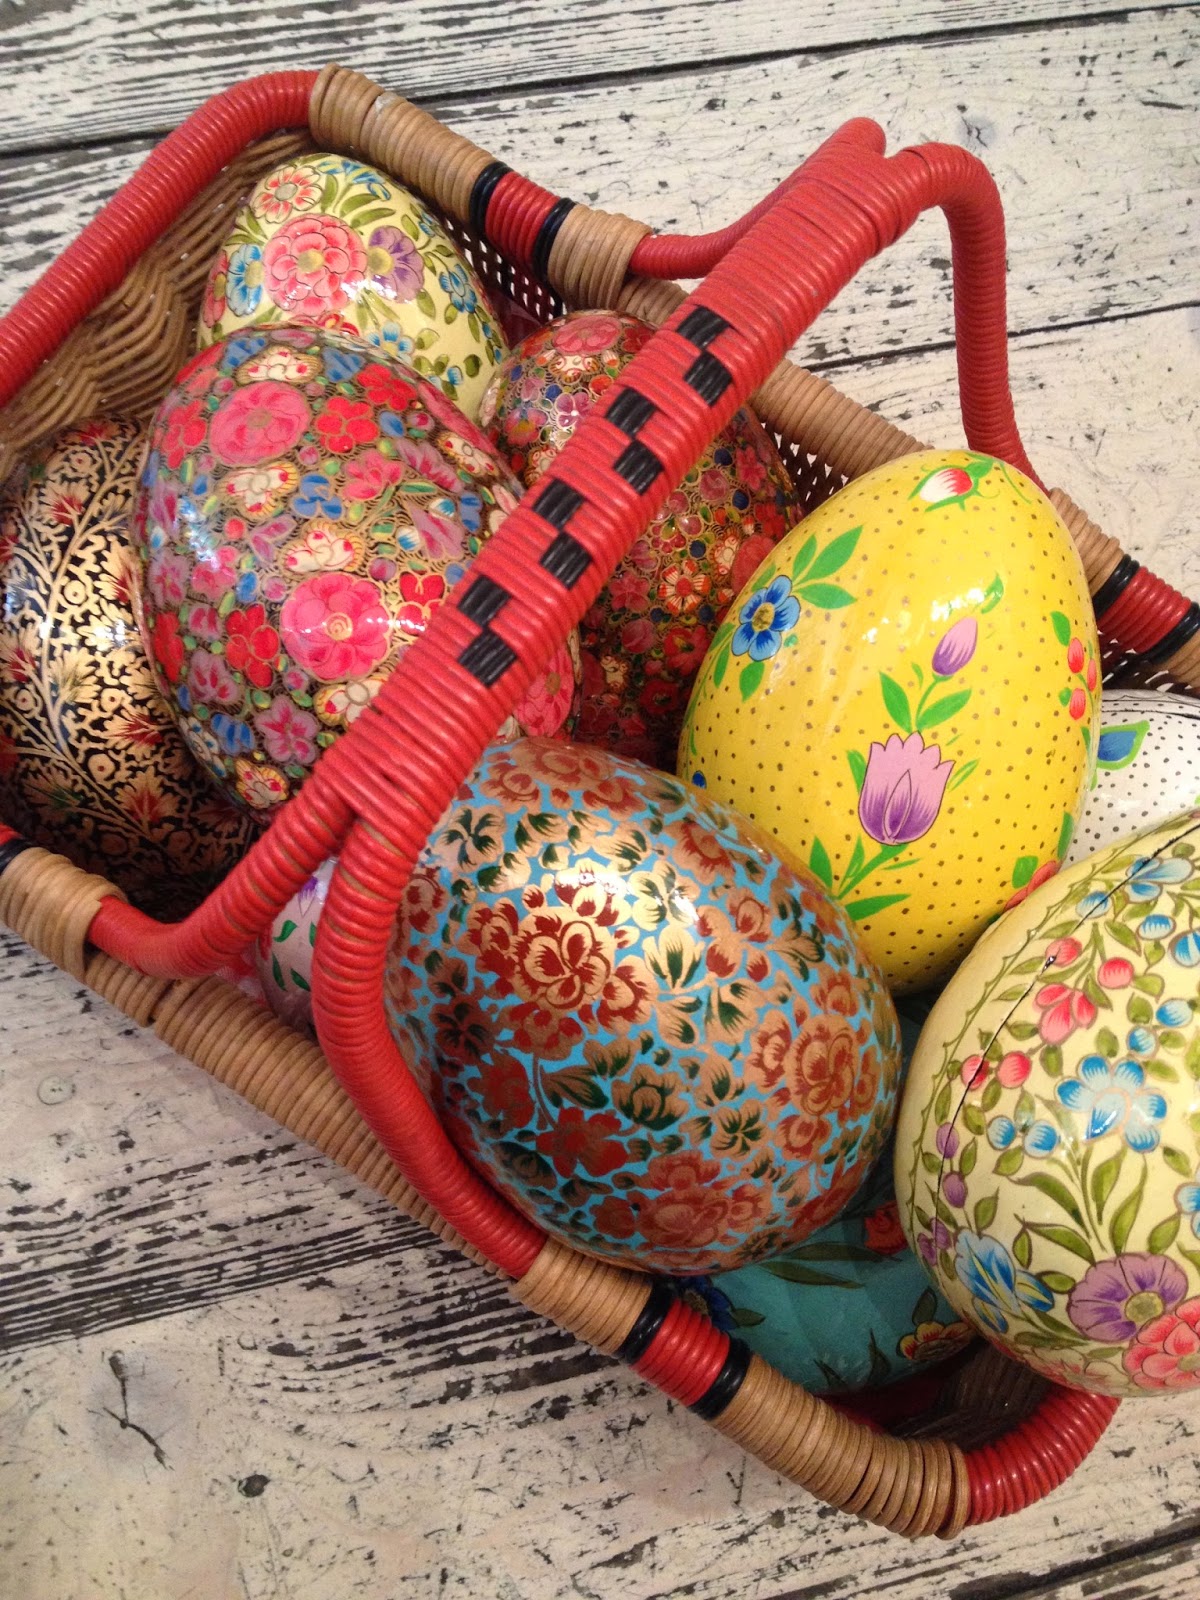 http://www.honeyjam.co.uk/product/fair-trade-hand-painted-egg-boxes